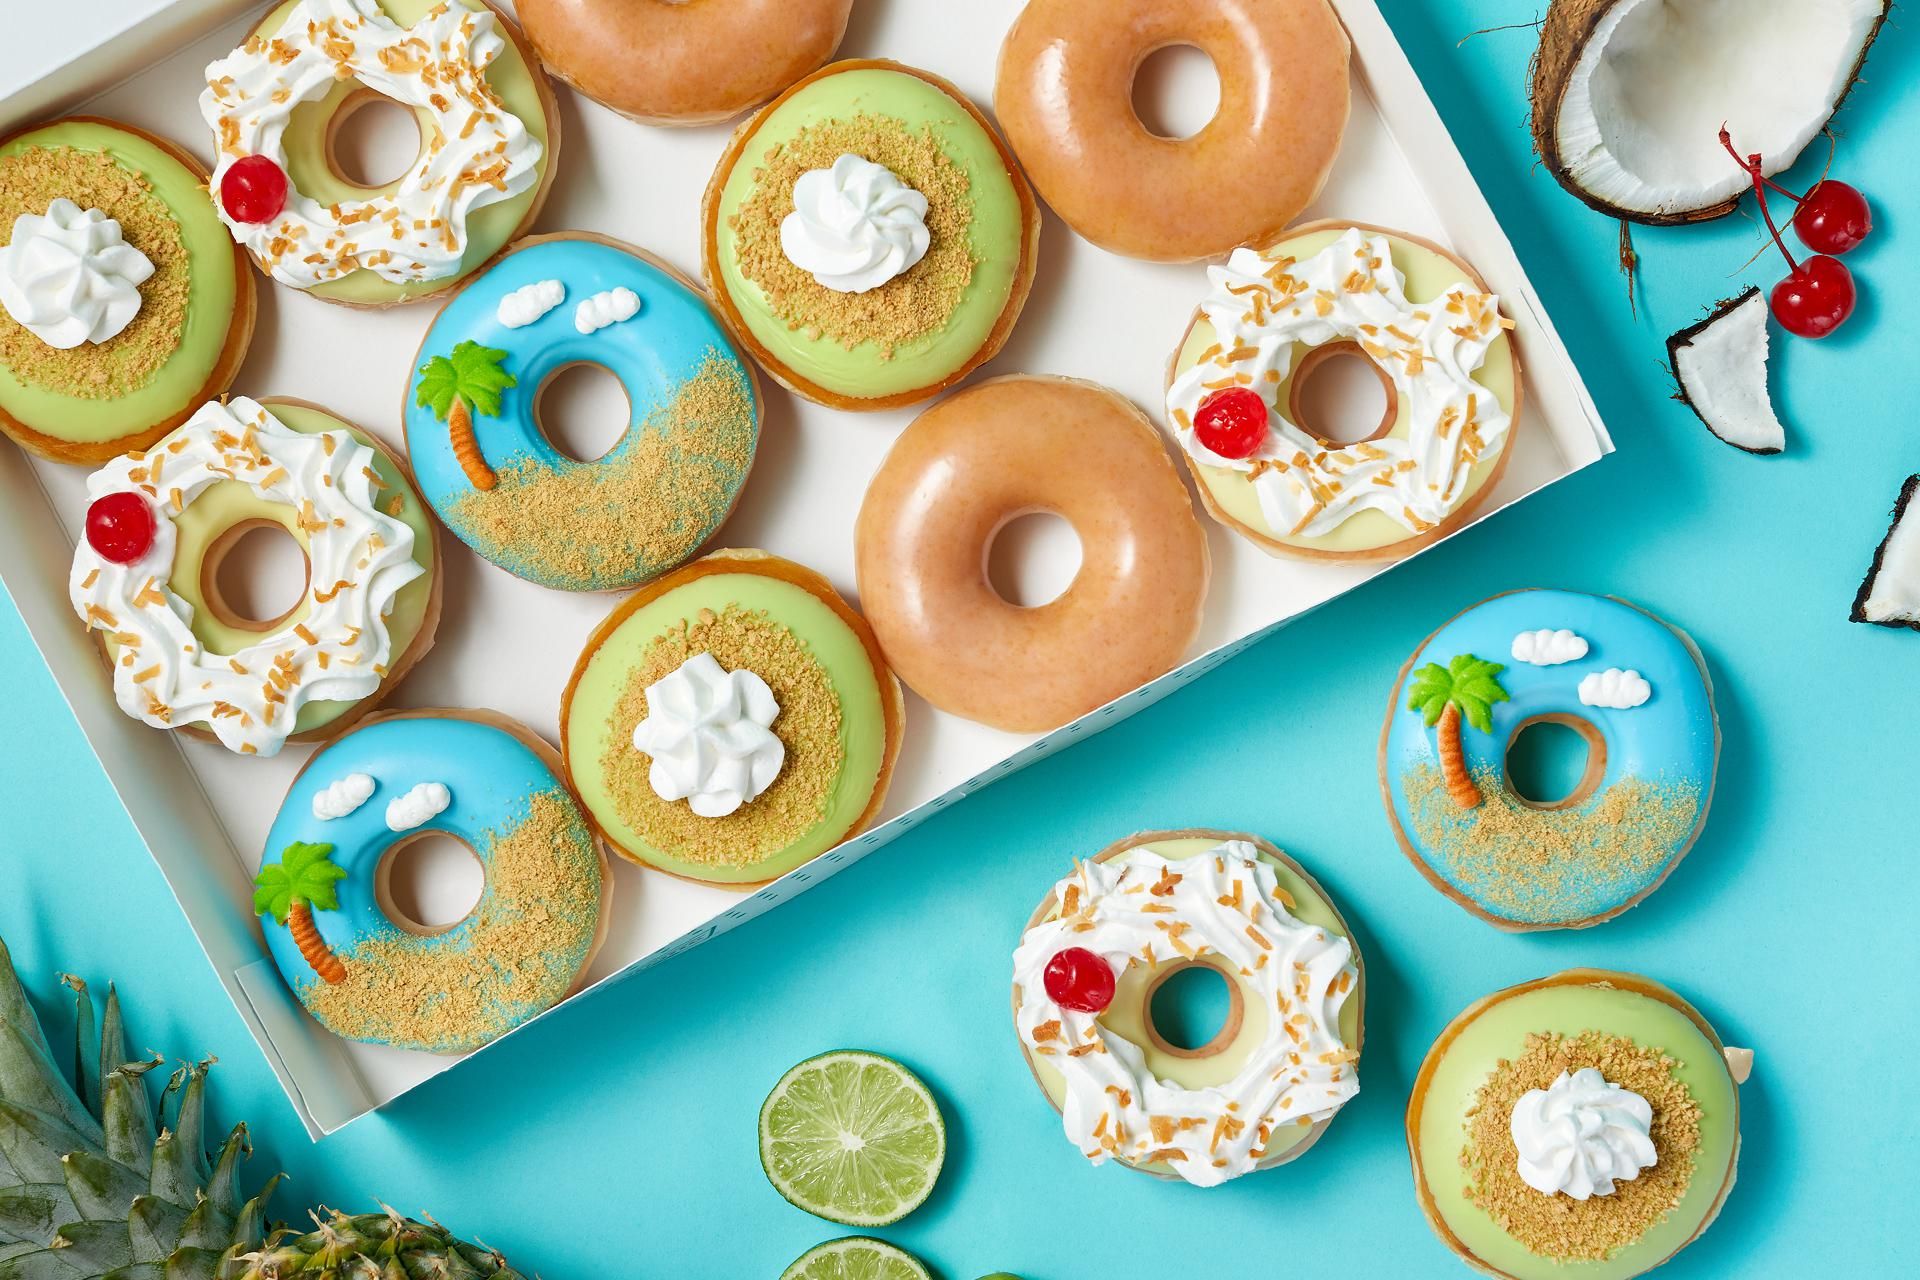 Krispy Kreme doughnuts with key lime, palm tree designs